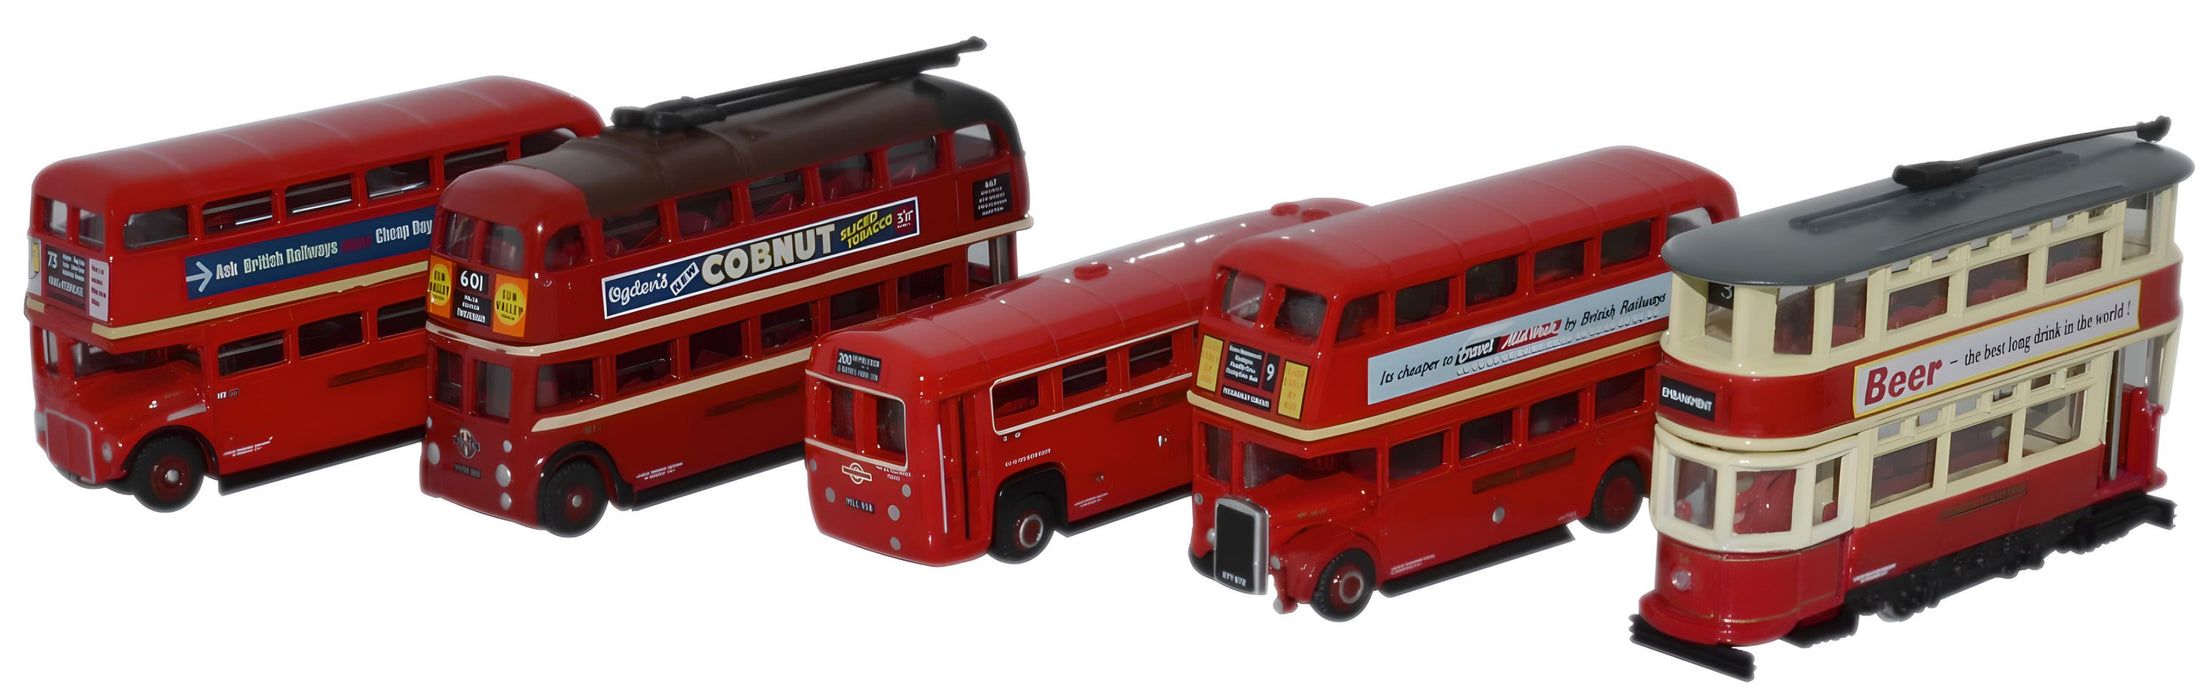 Oxford Diecast Five Piece Bus Set - 1:148 Scale NSET02